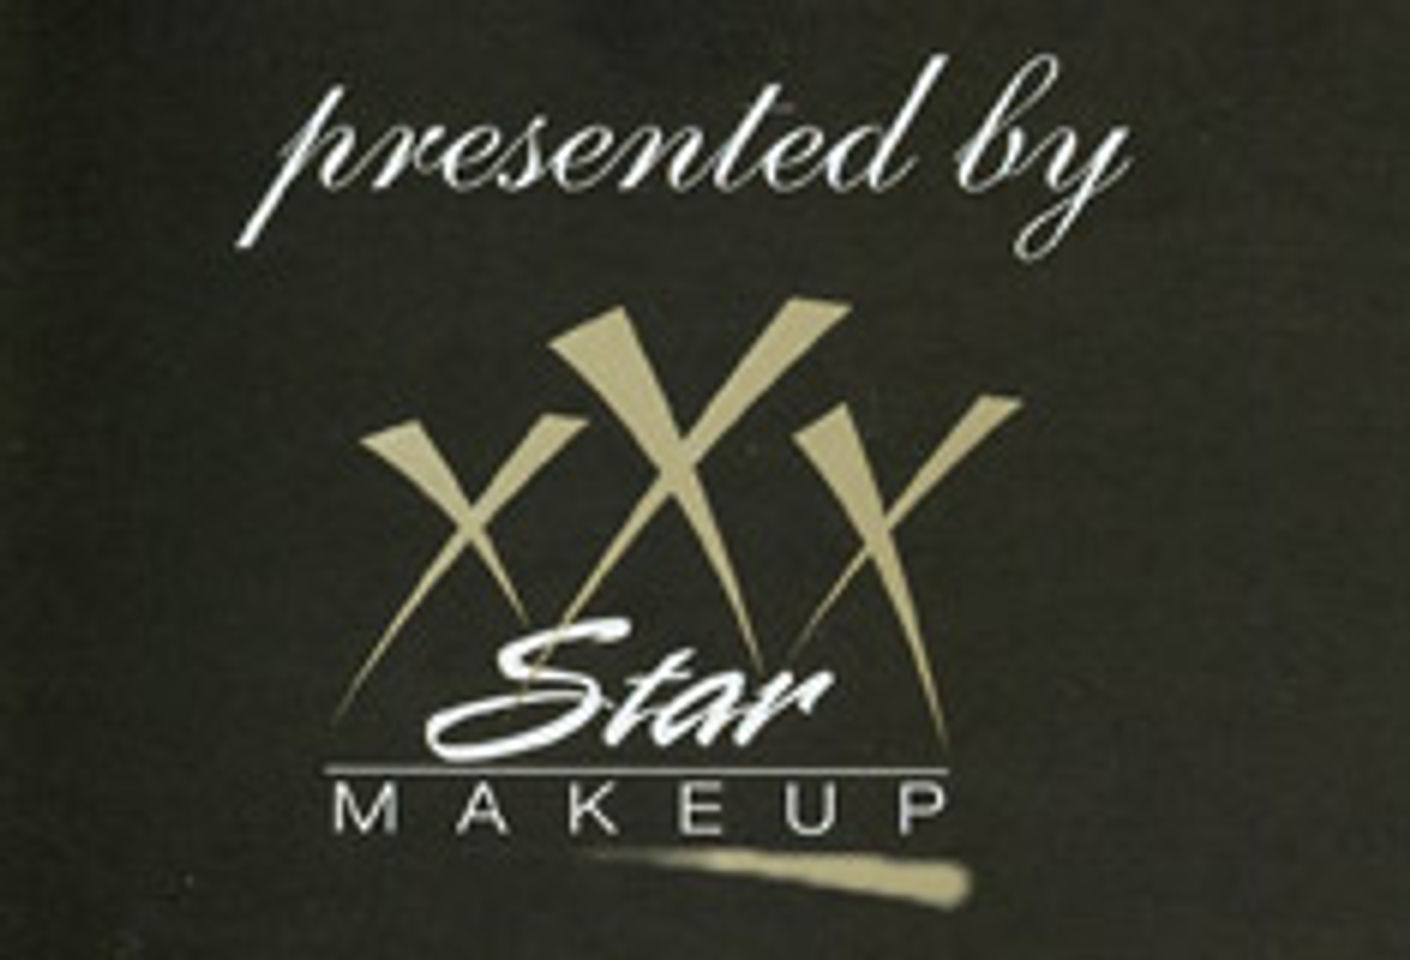 XXX Star Makeup Launch Party Tonight